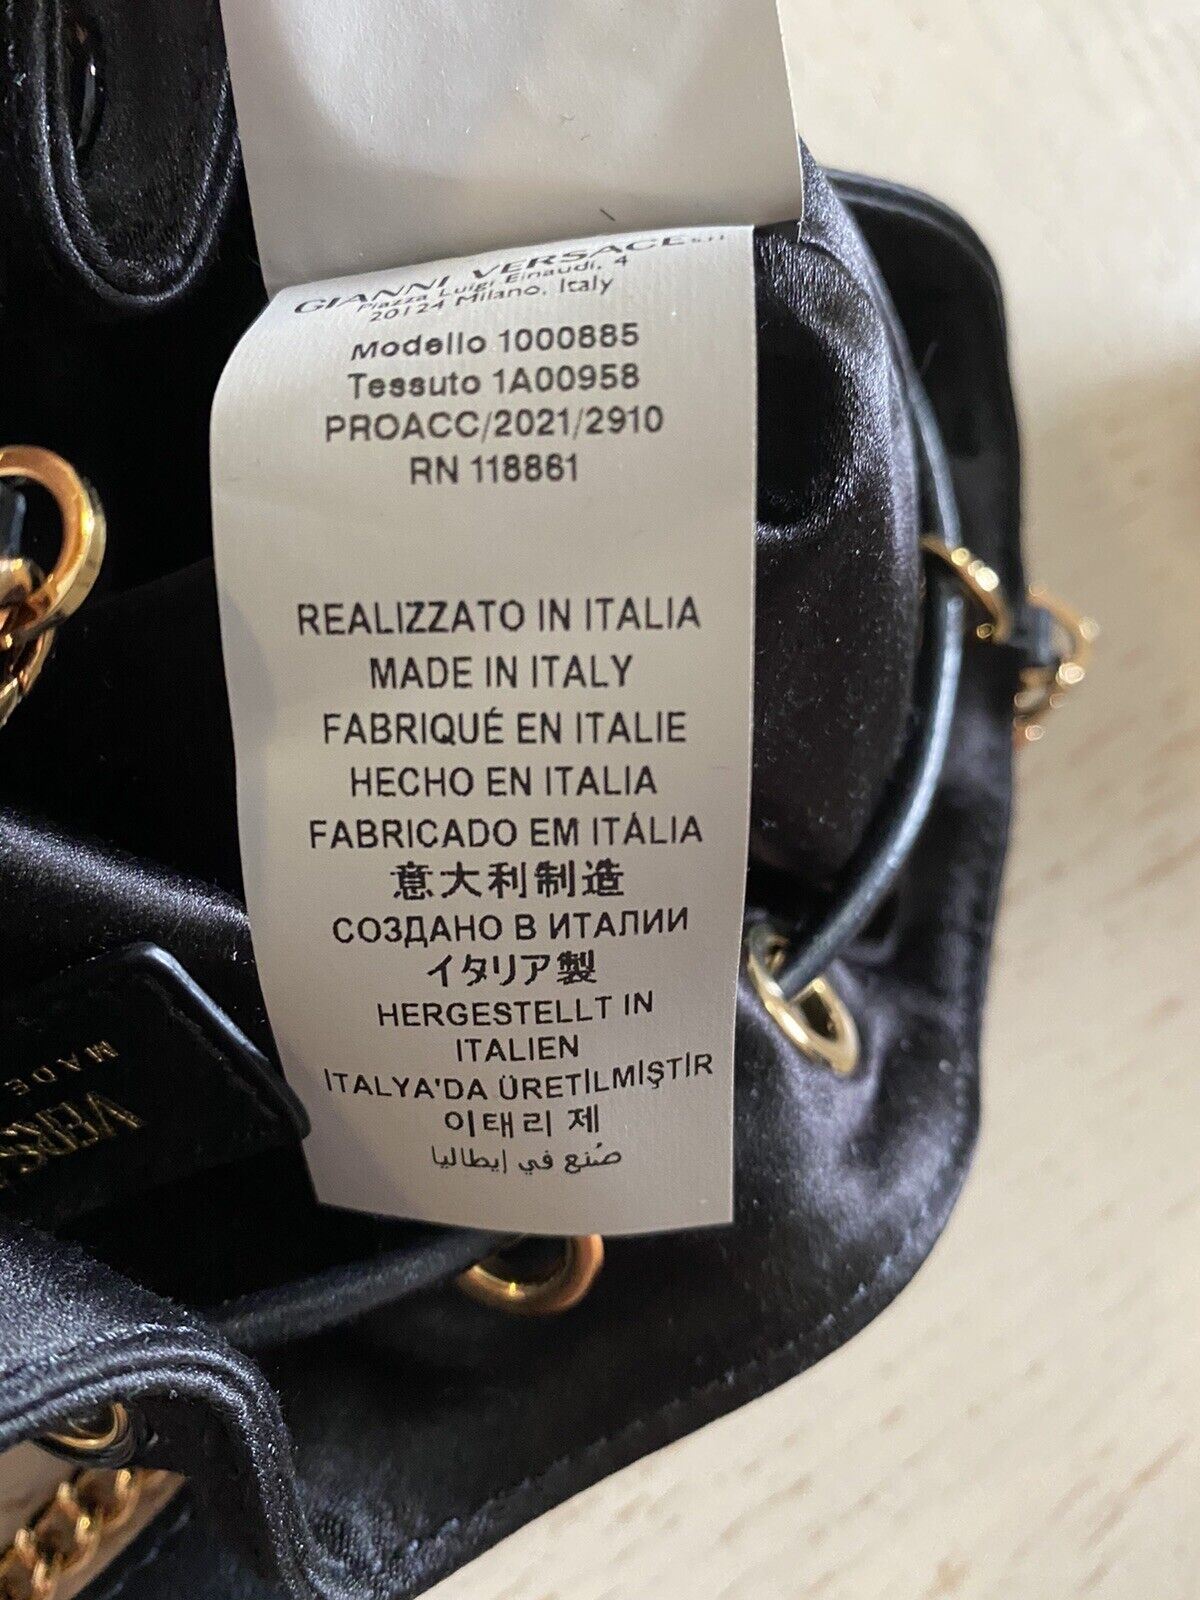 New $1275 Versace Women Medusa Charm Evening Satin Hobo Bag Black Italy